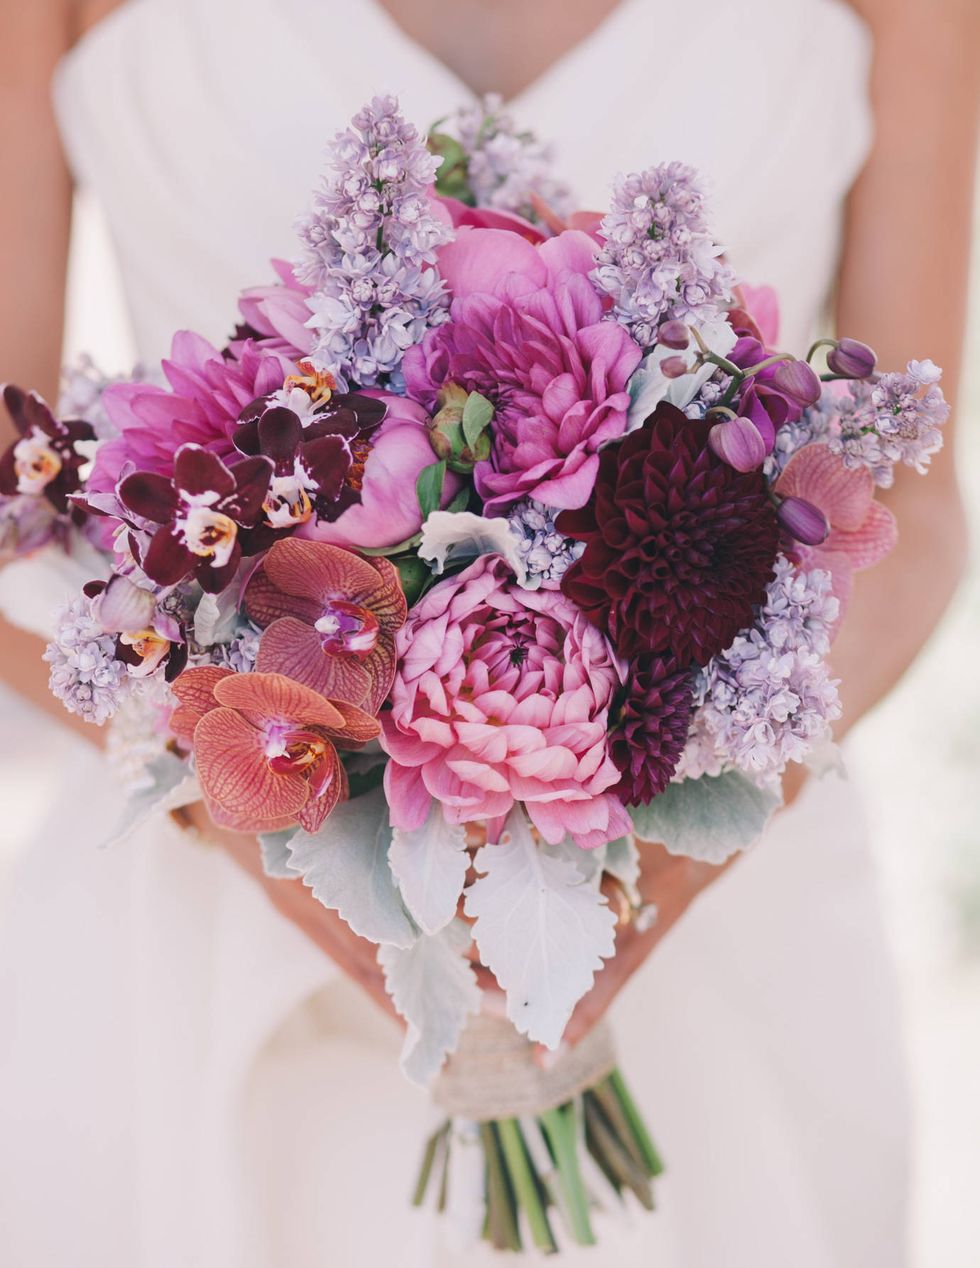 Summer Wedding Bouquets - Beautiful Flowers for Summer Weddings